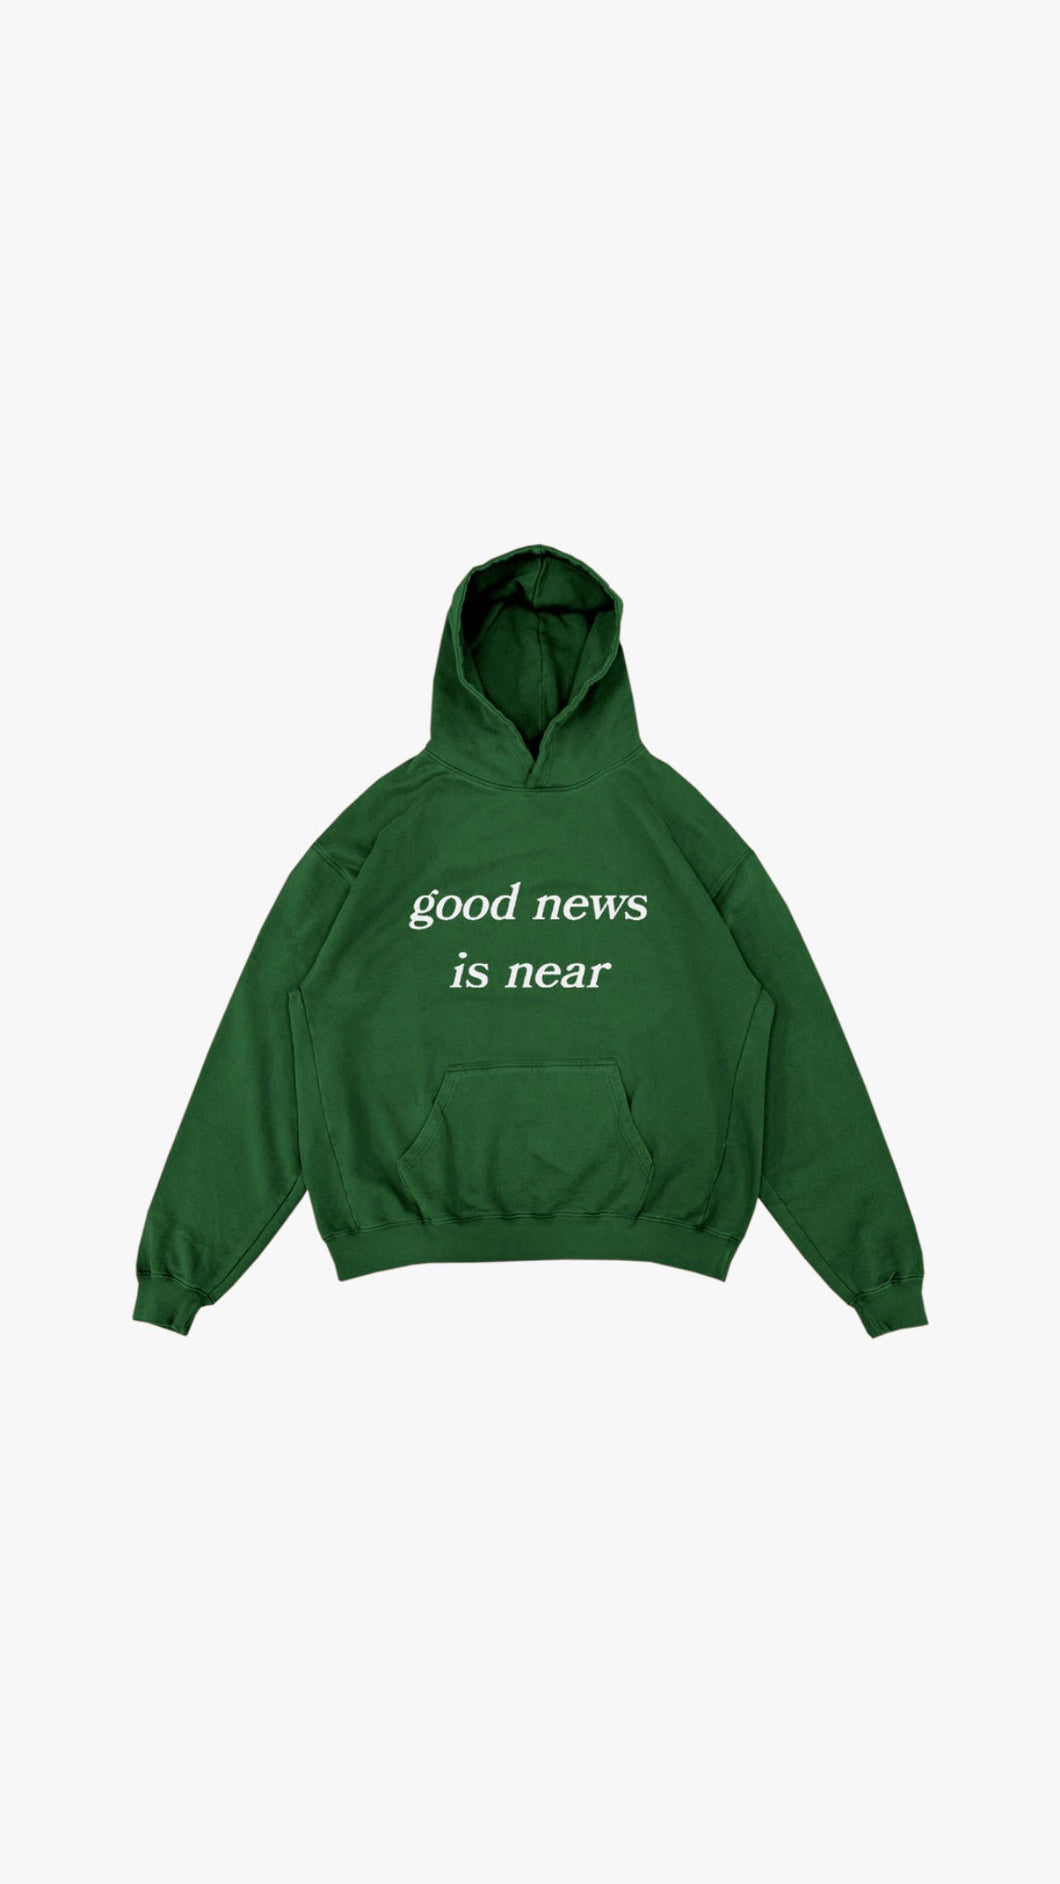 “good news is near” Hoodie